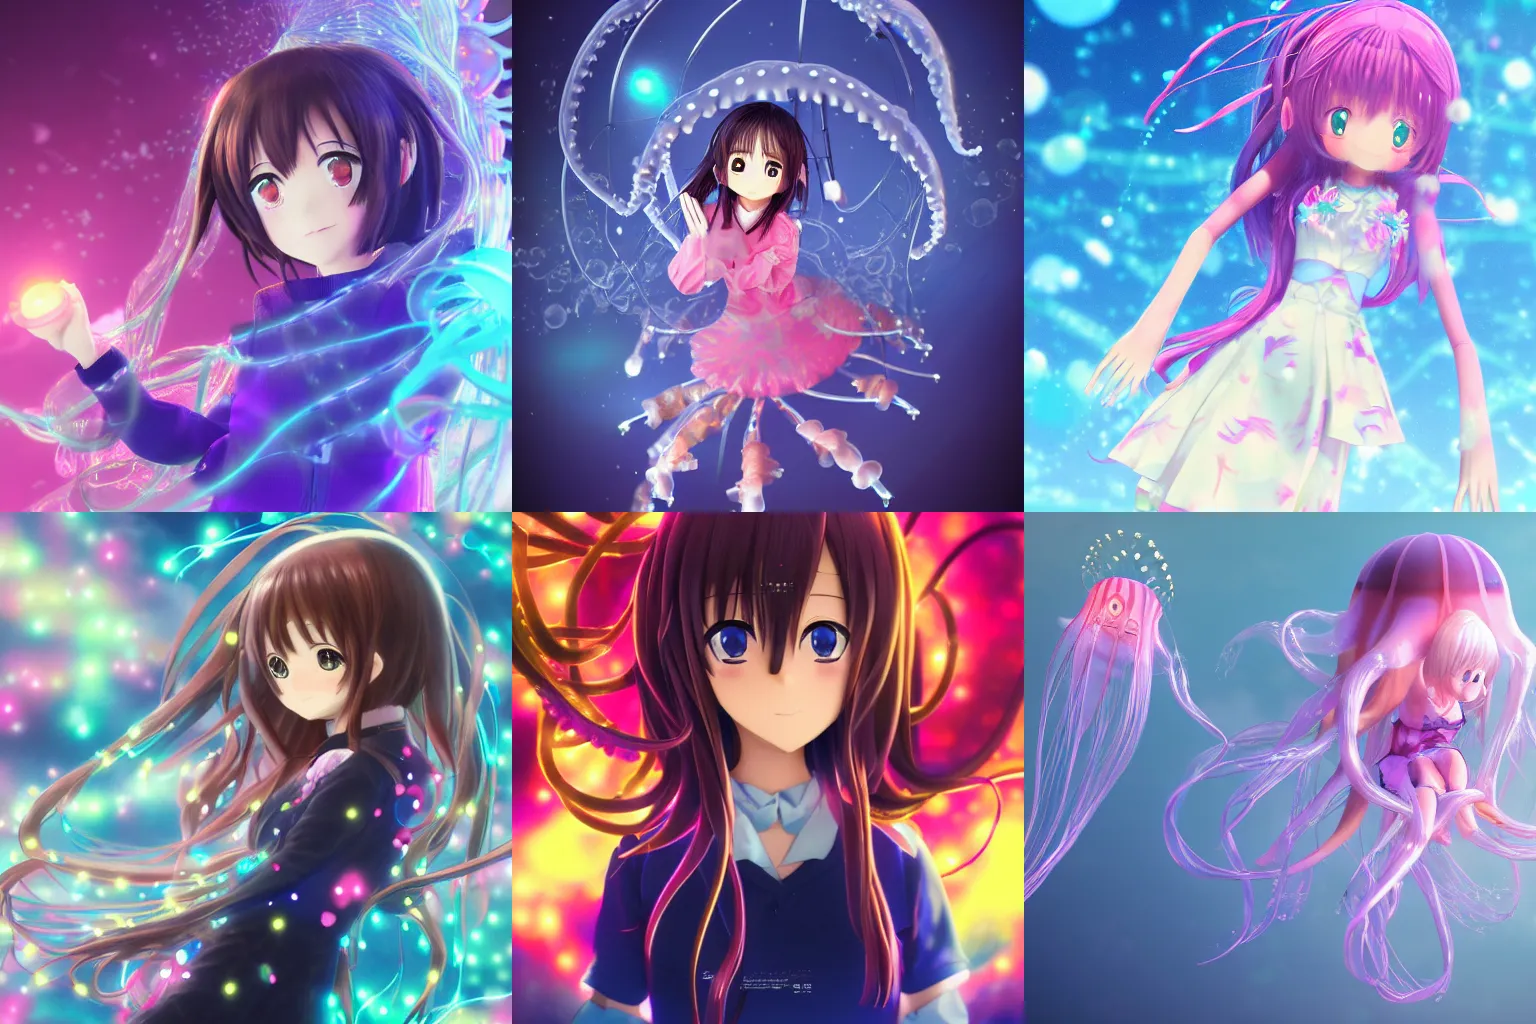 Prompt: intricate anime girl k-on kyoani, riding a jellyfish bio-mechanical bio-luminescence, octane render, trending on artstation, hyper realism, 8k, fractals, pattern